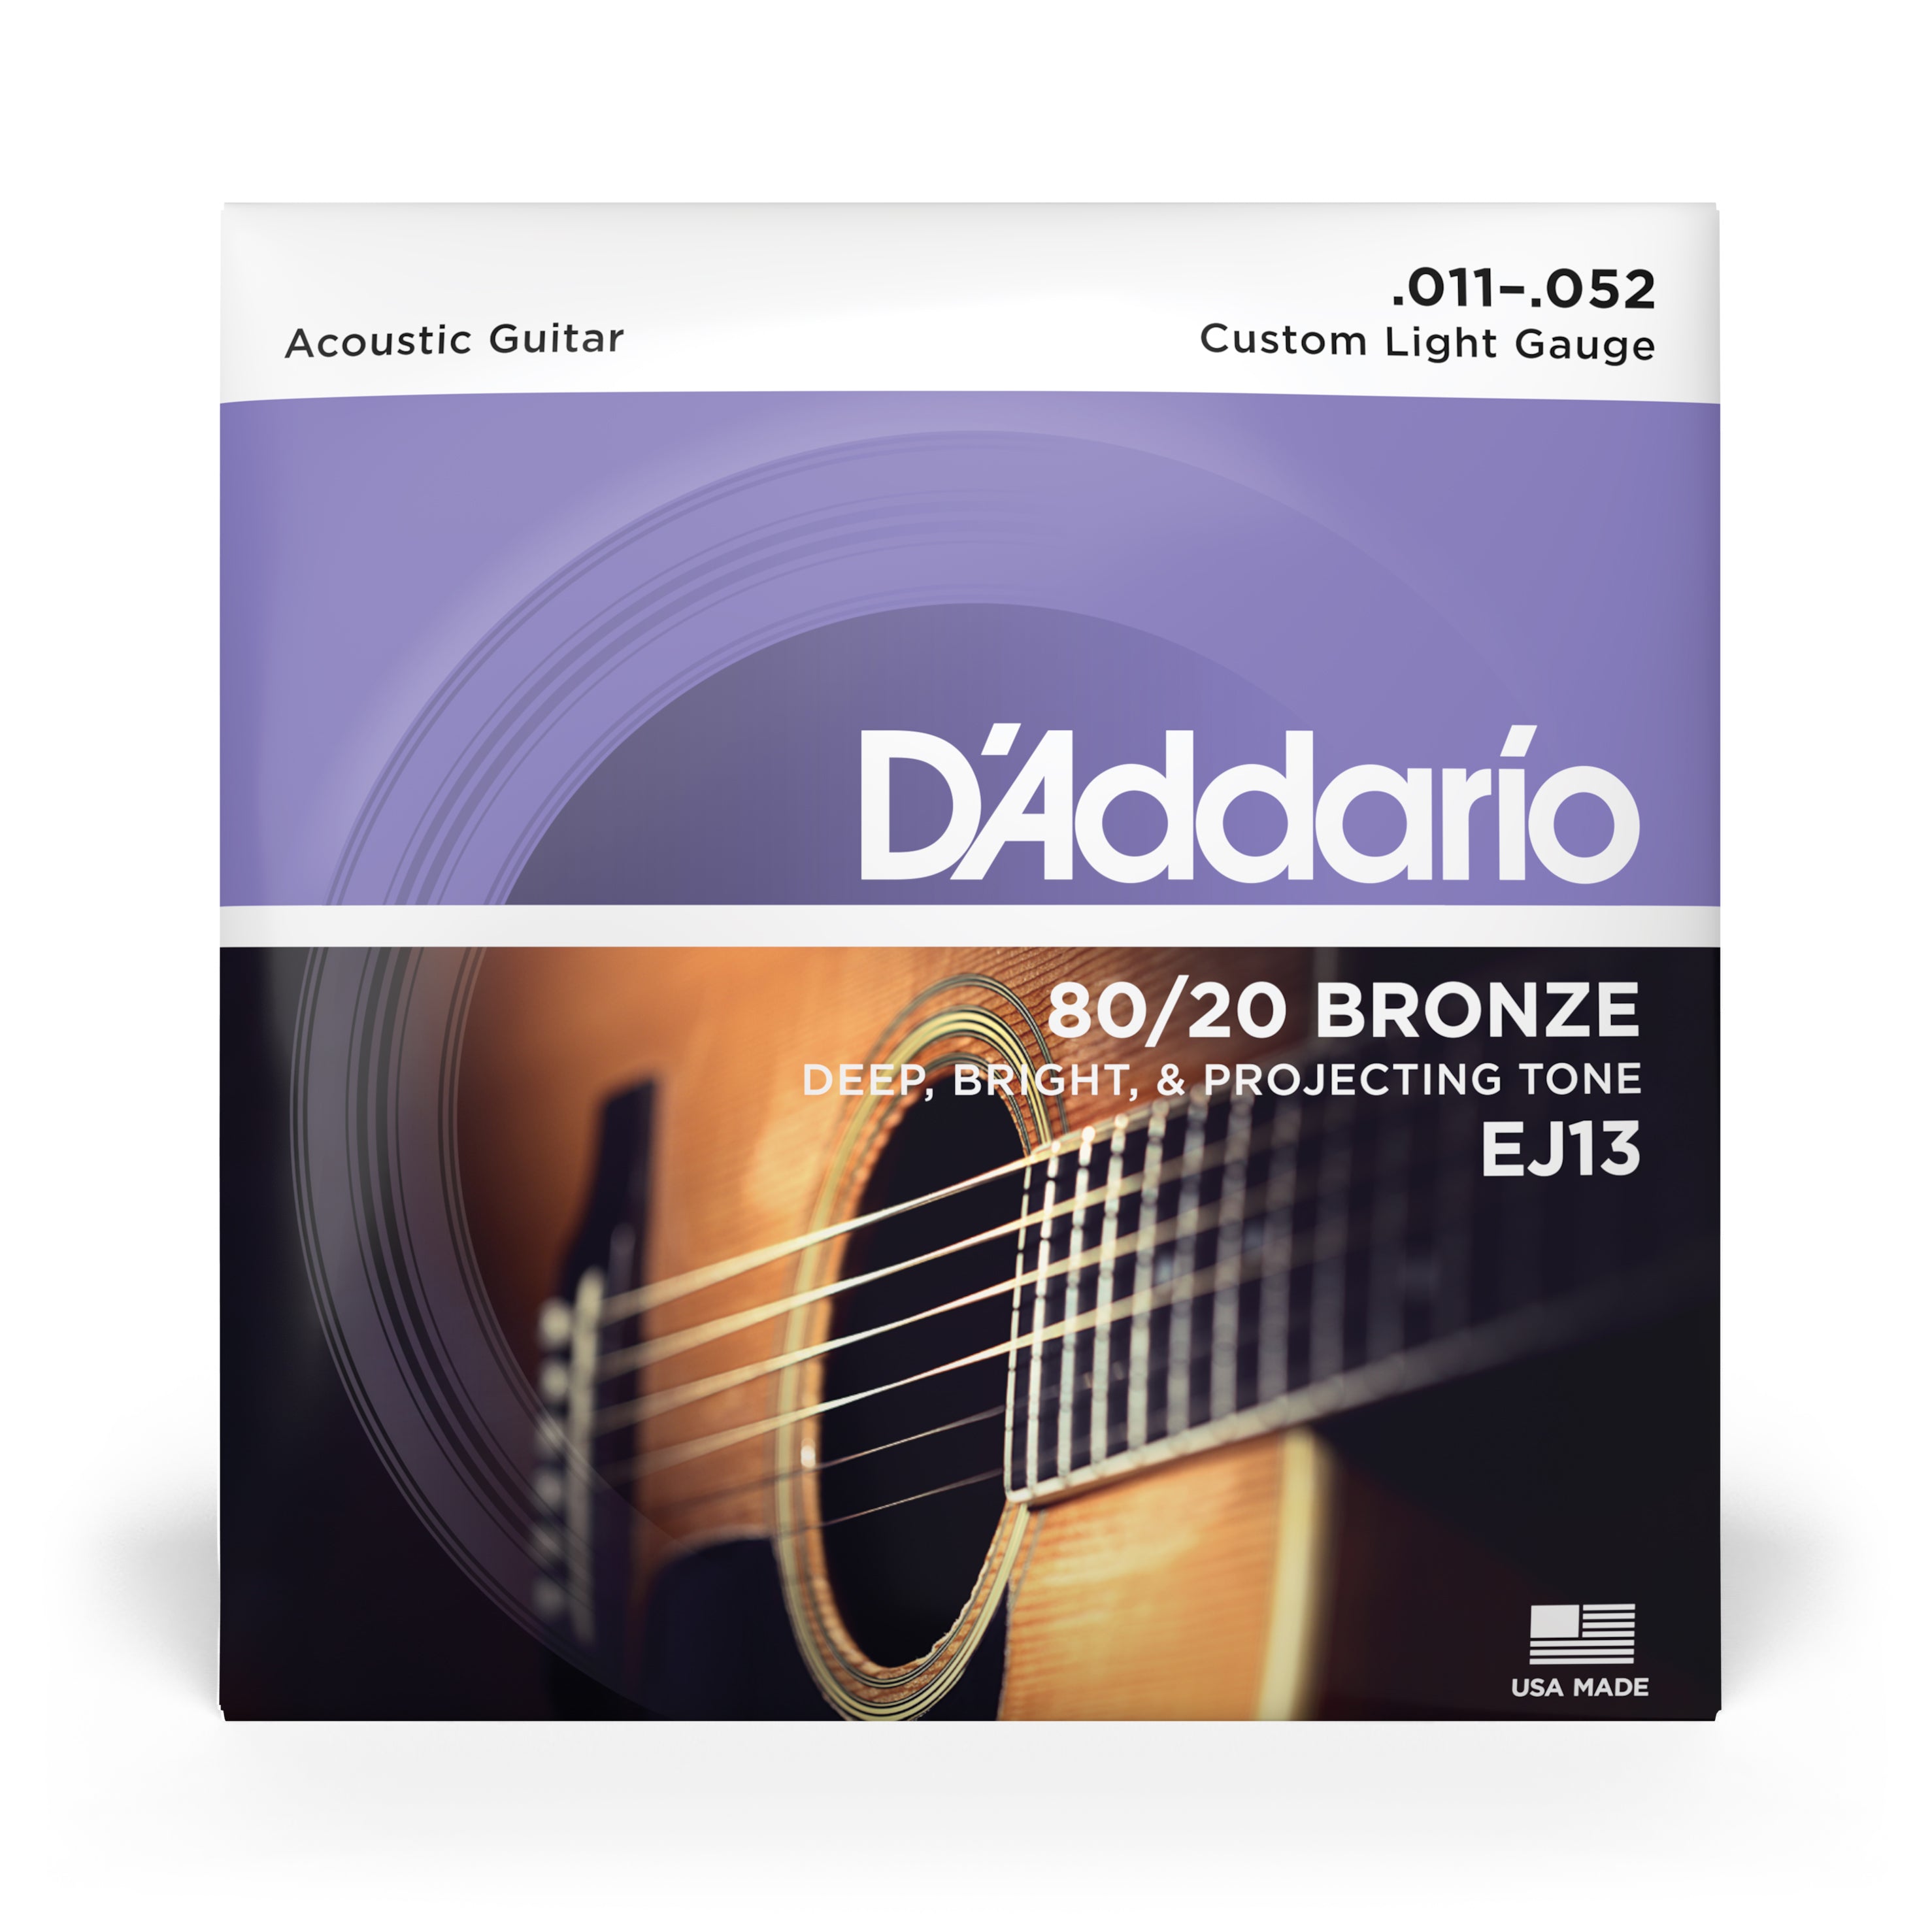 D'Addario 80/20 Bronze 11-52 Acoustic Guitar Strings, Custom Light